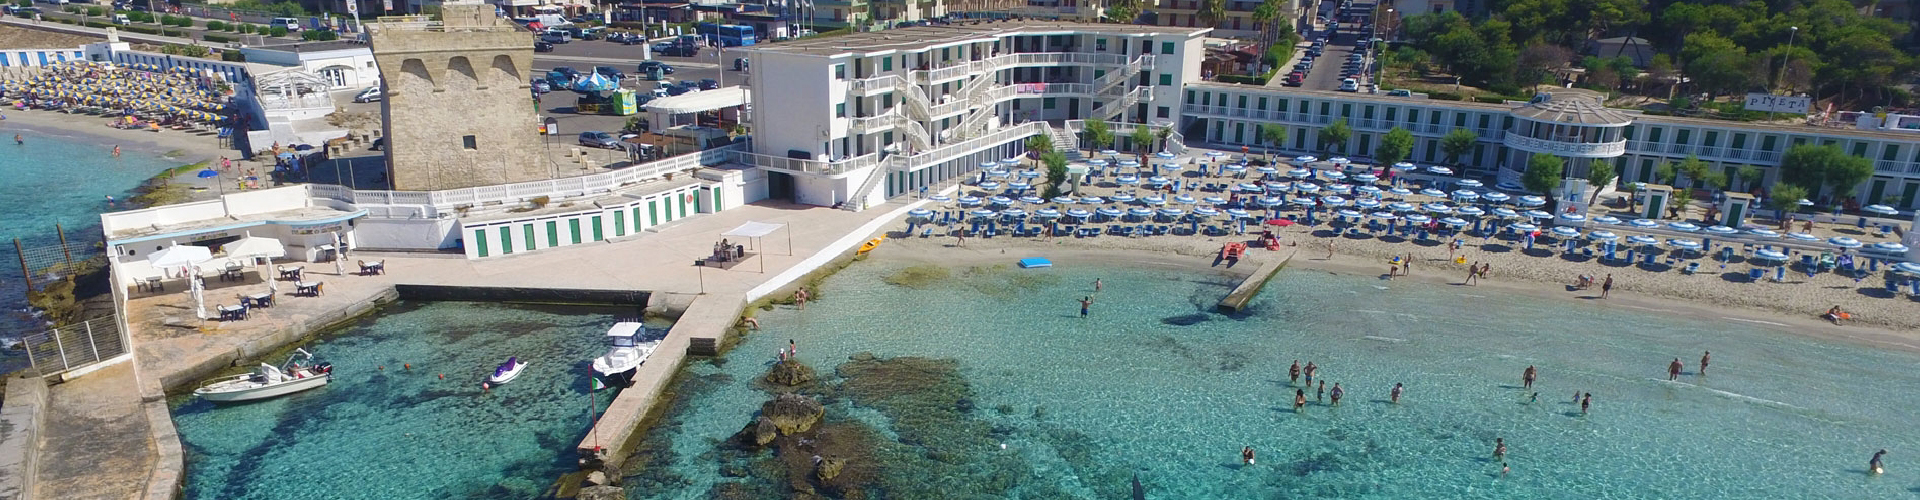 Appartamenti San Giovanni Beach